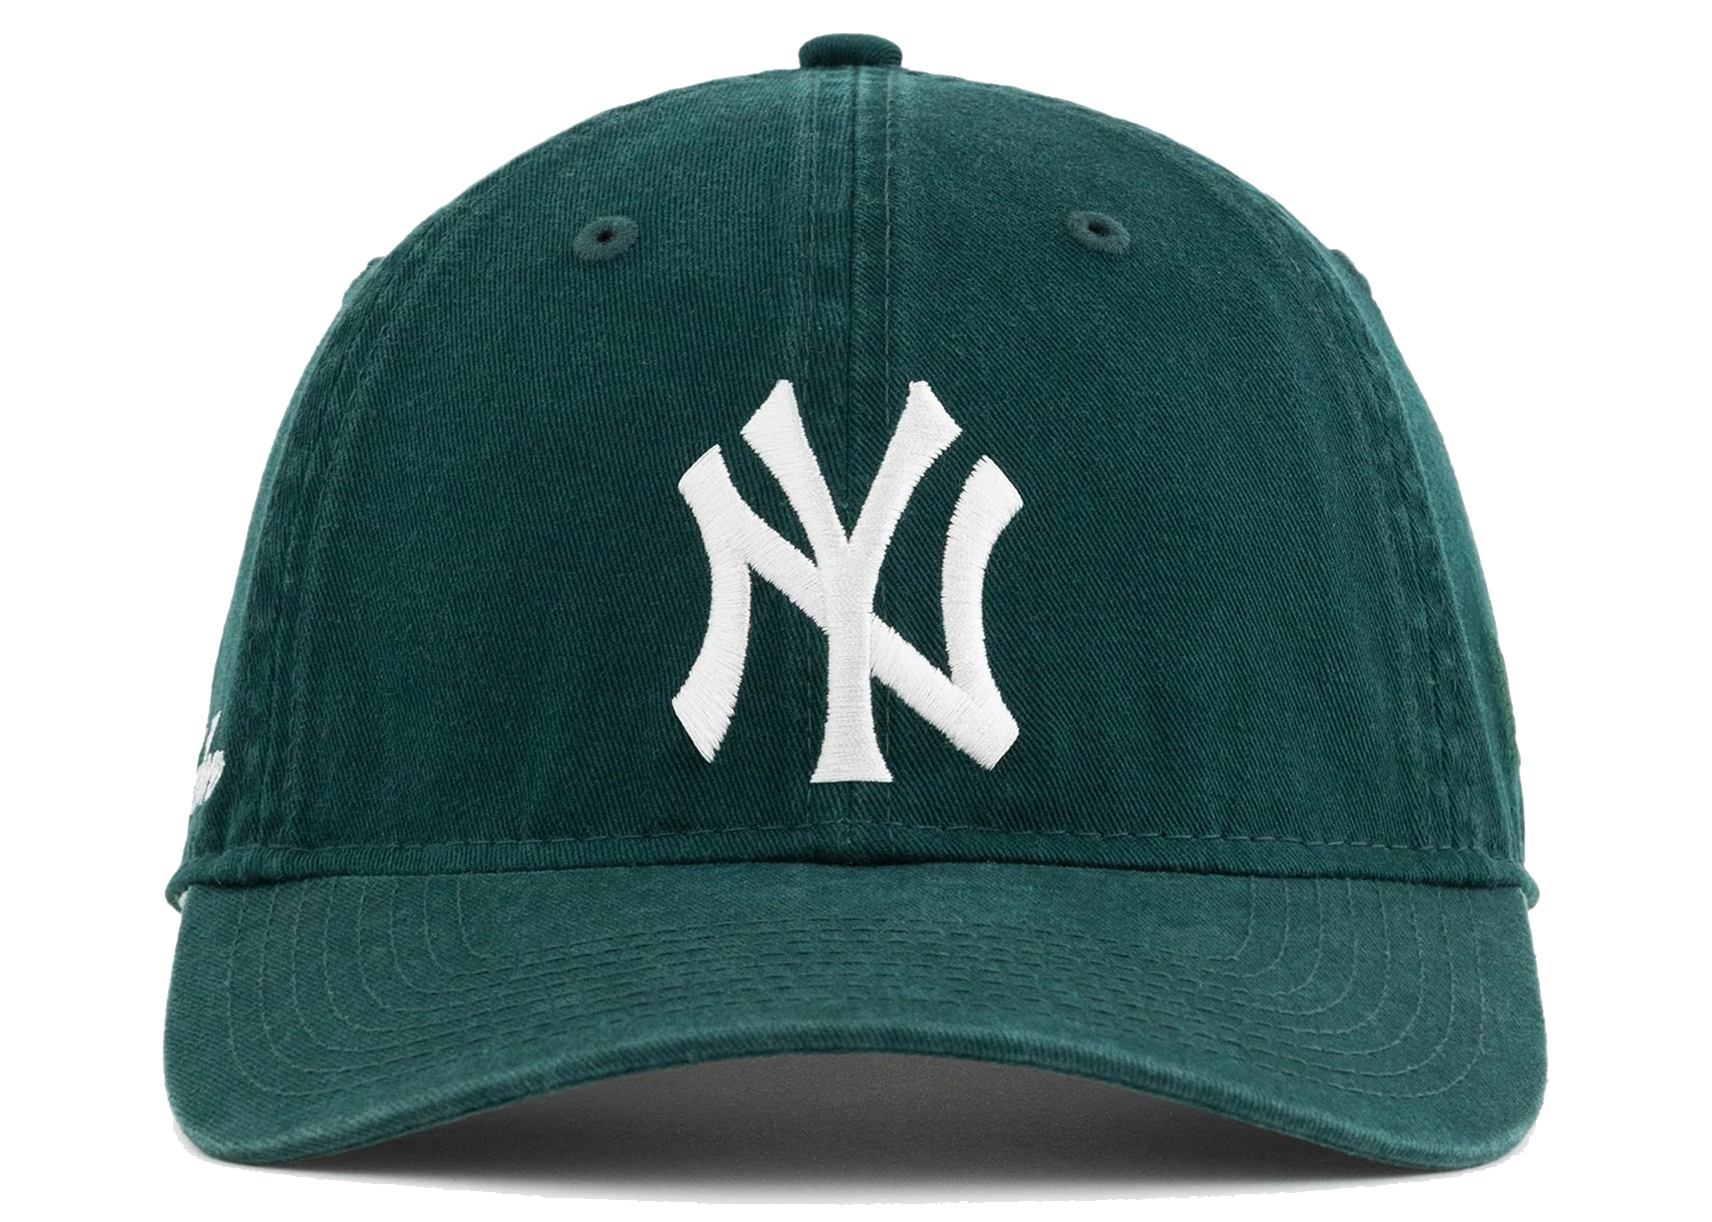 Aime Leon dore New Era Yankees Hat | gualterhelicopteros.com.br